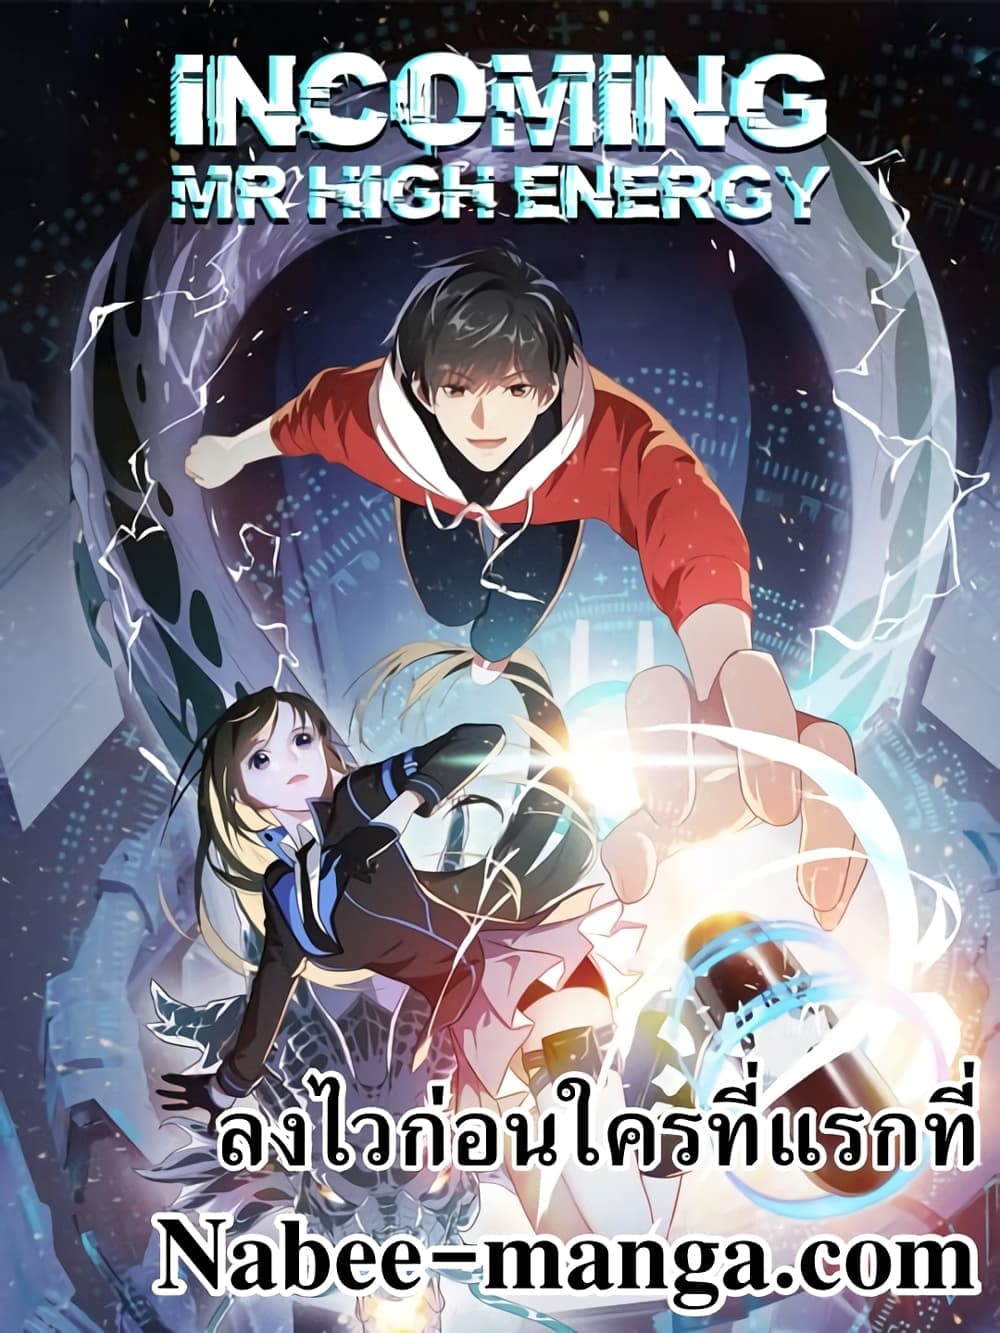 High Energy Strikes à¸à¸­à¸à¸à¸µà¹ 244 (1)